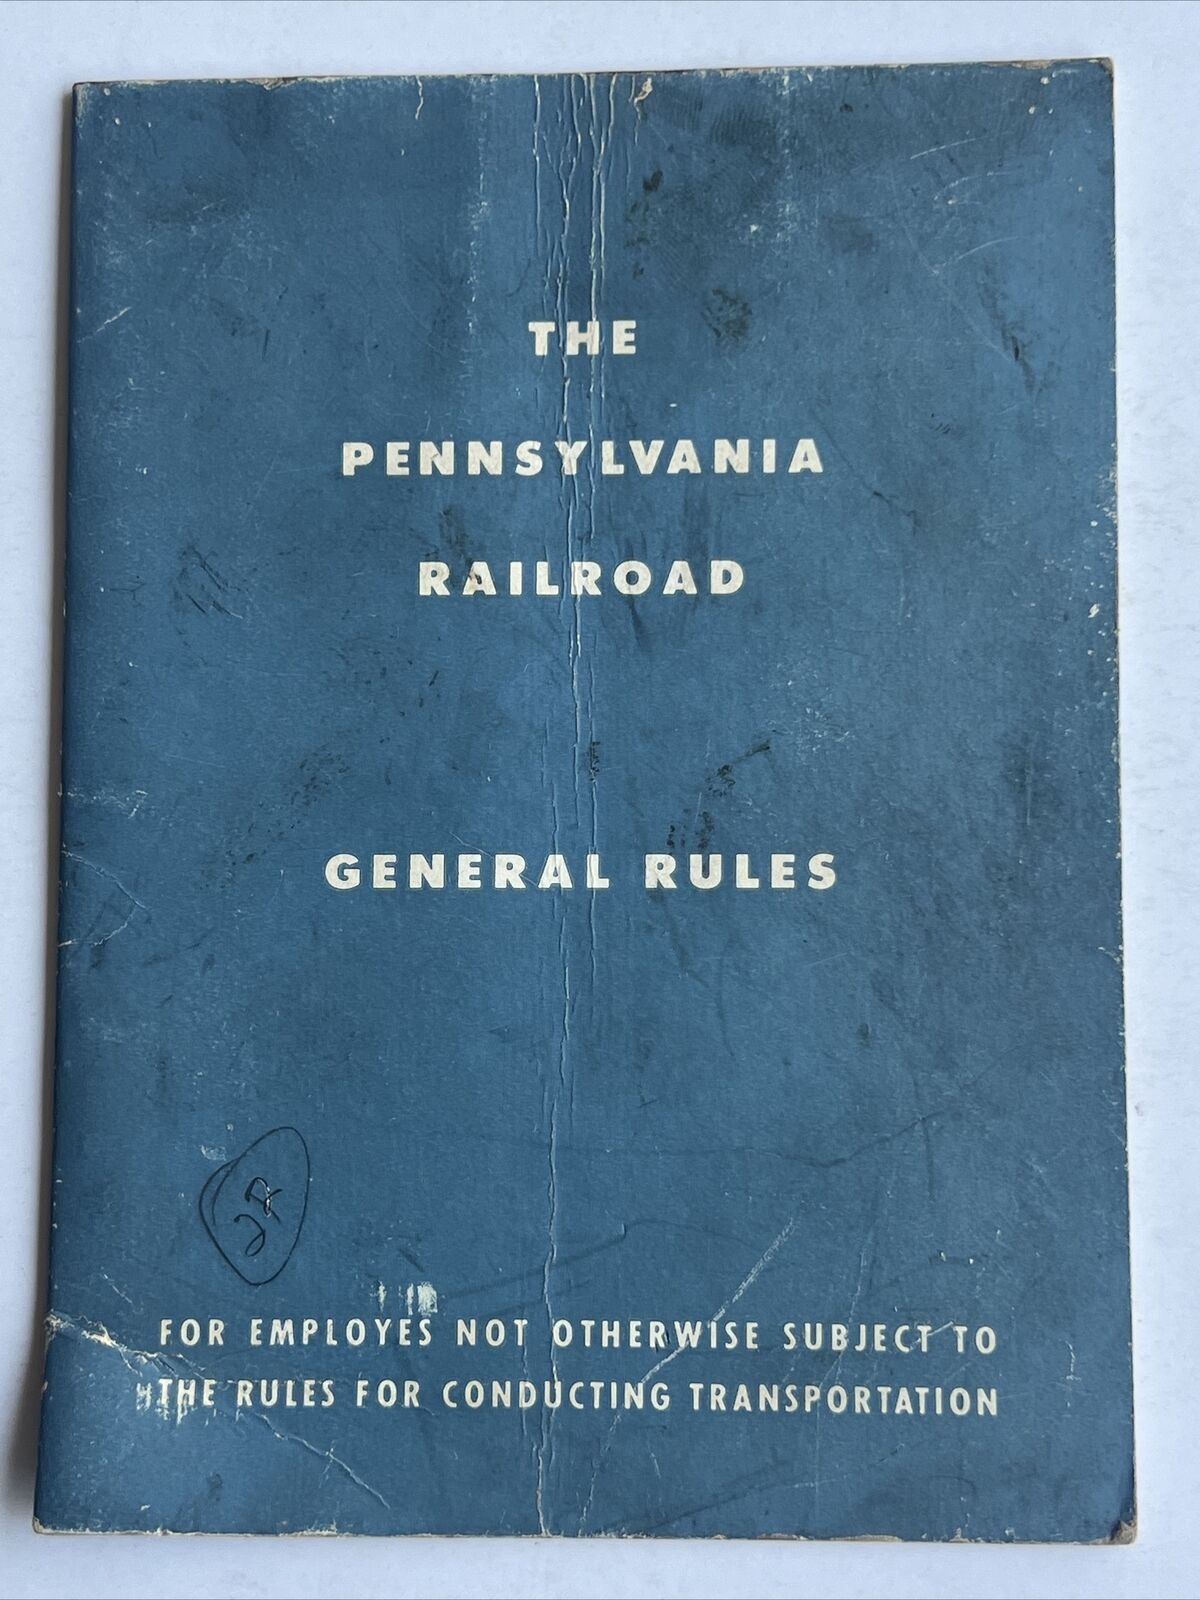 The Pennsylvania Railroad, General Rules Handbook. Effective 1955